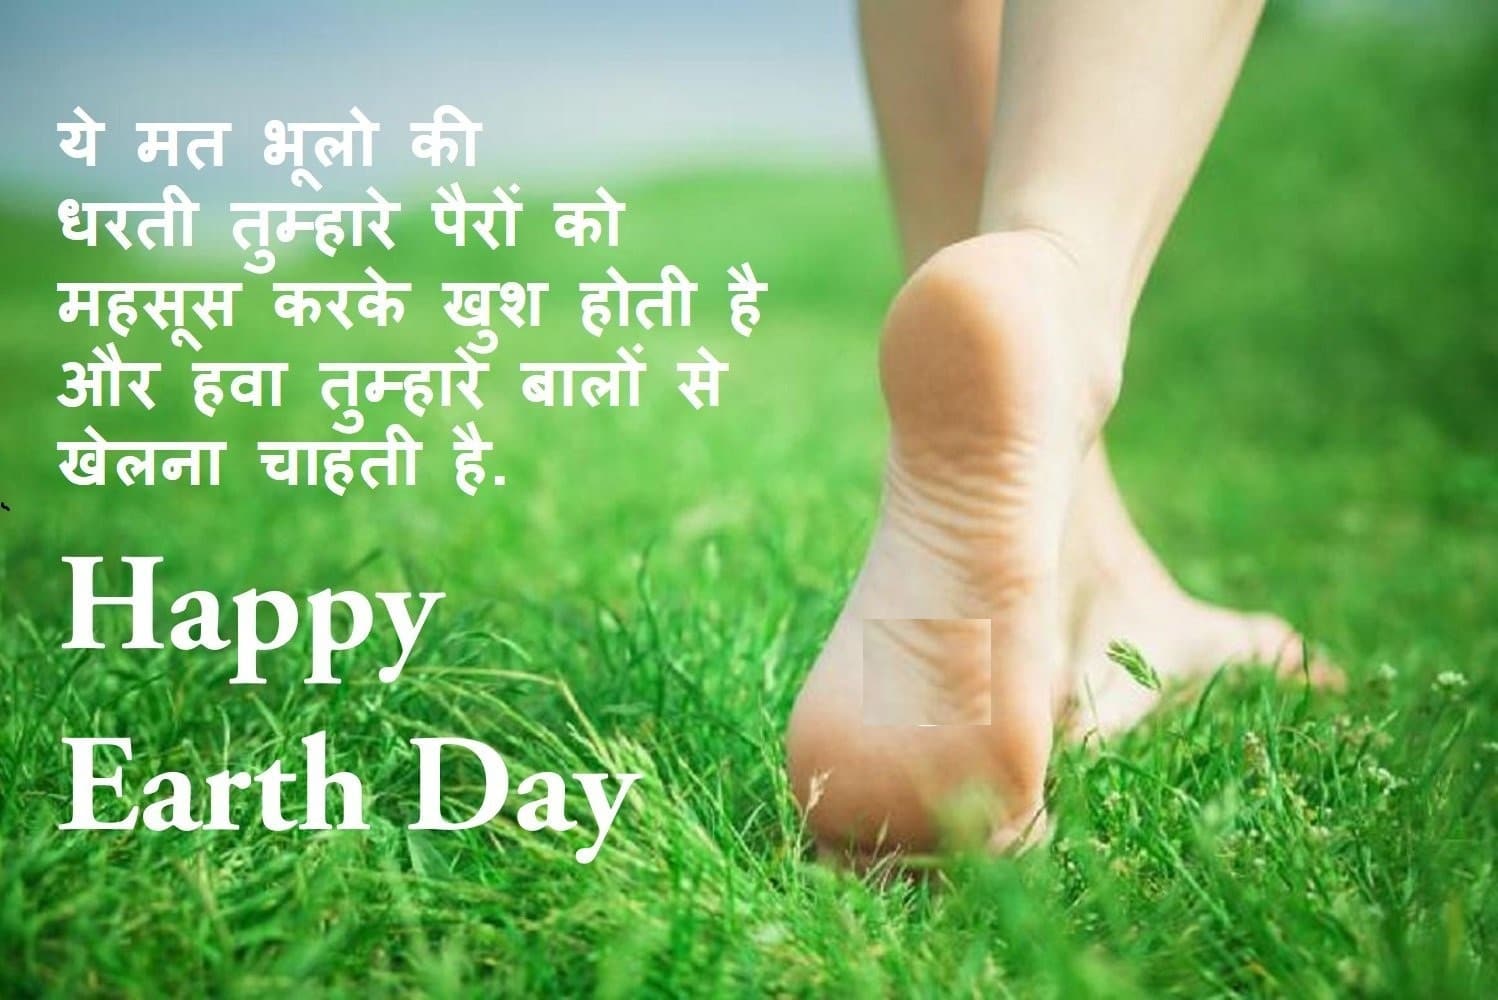 Earth Day Slogan In Hindi 